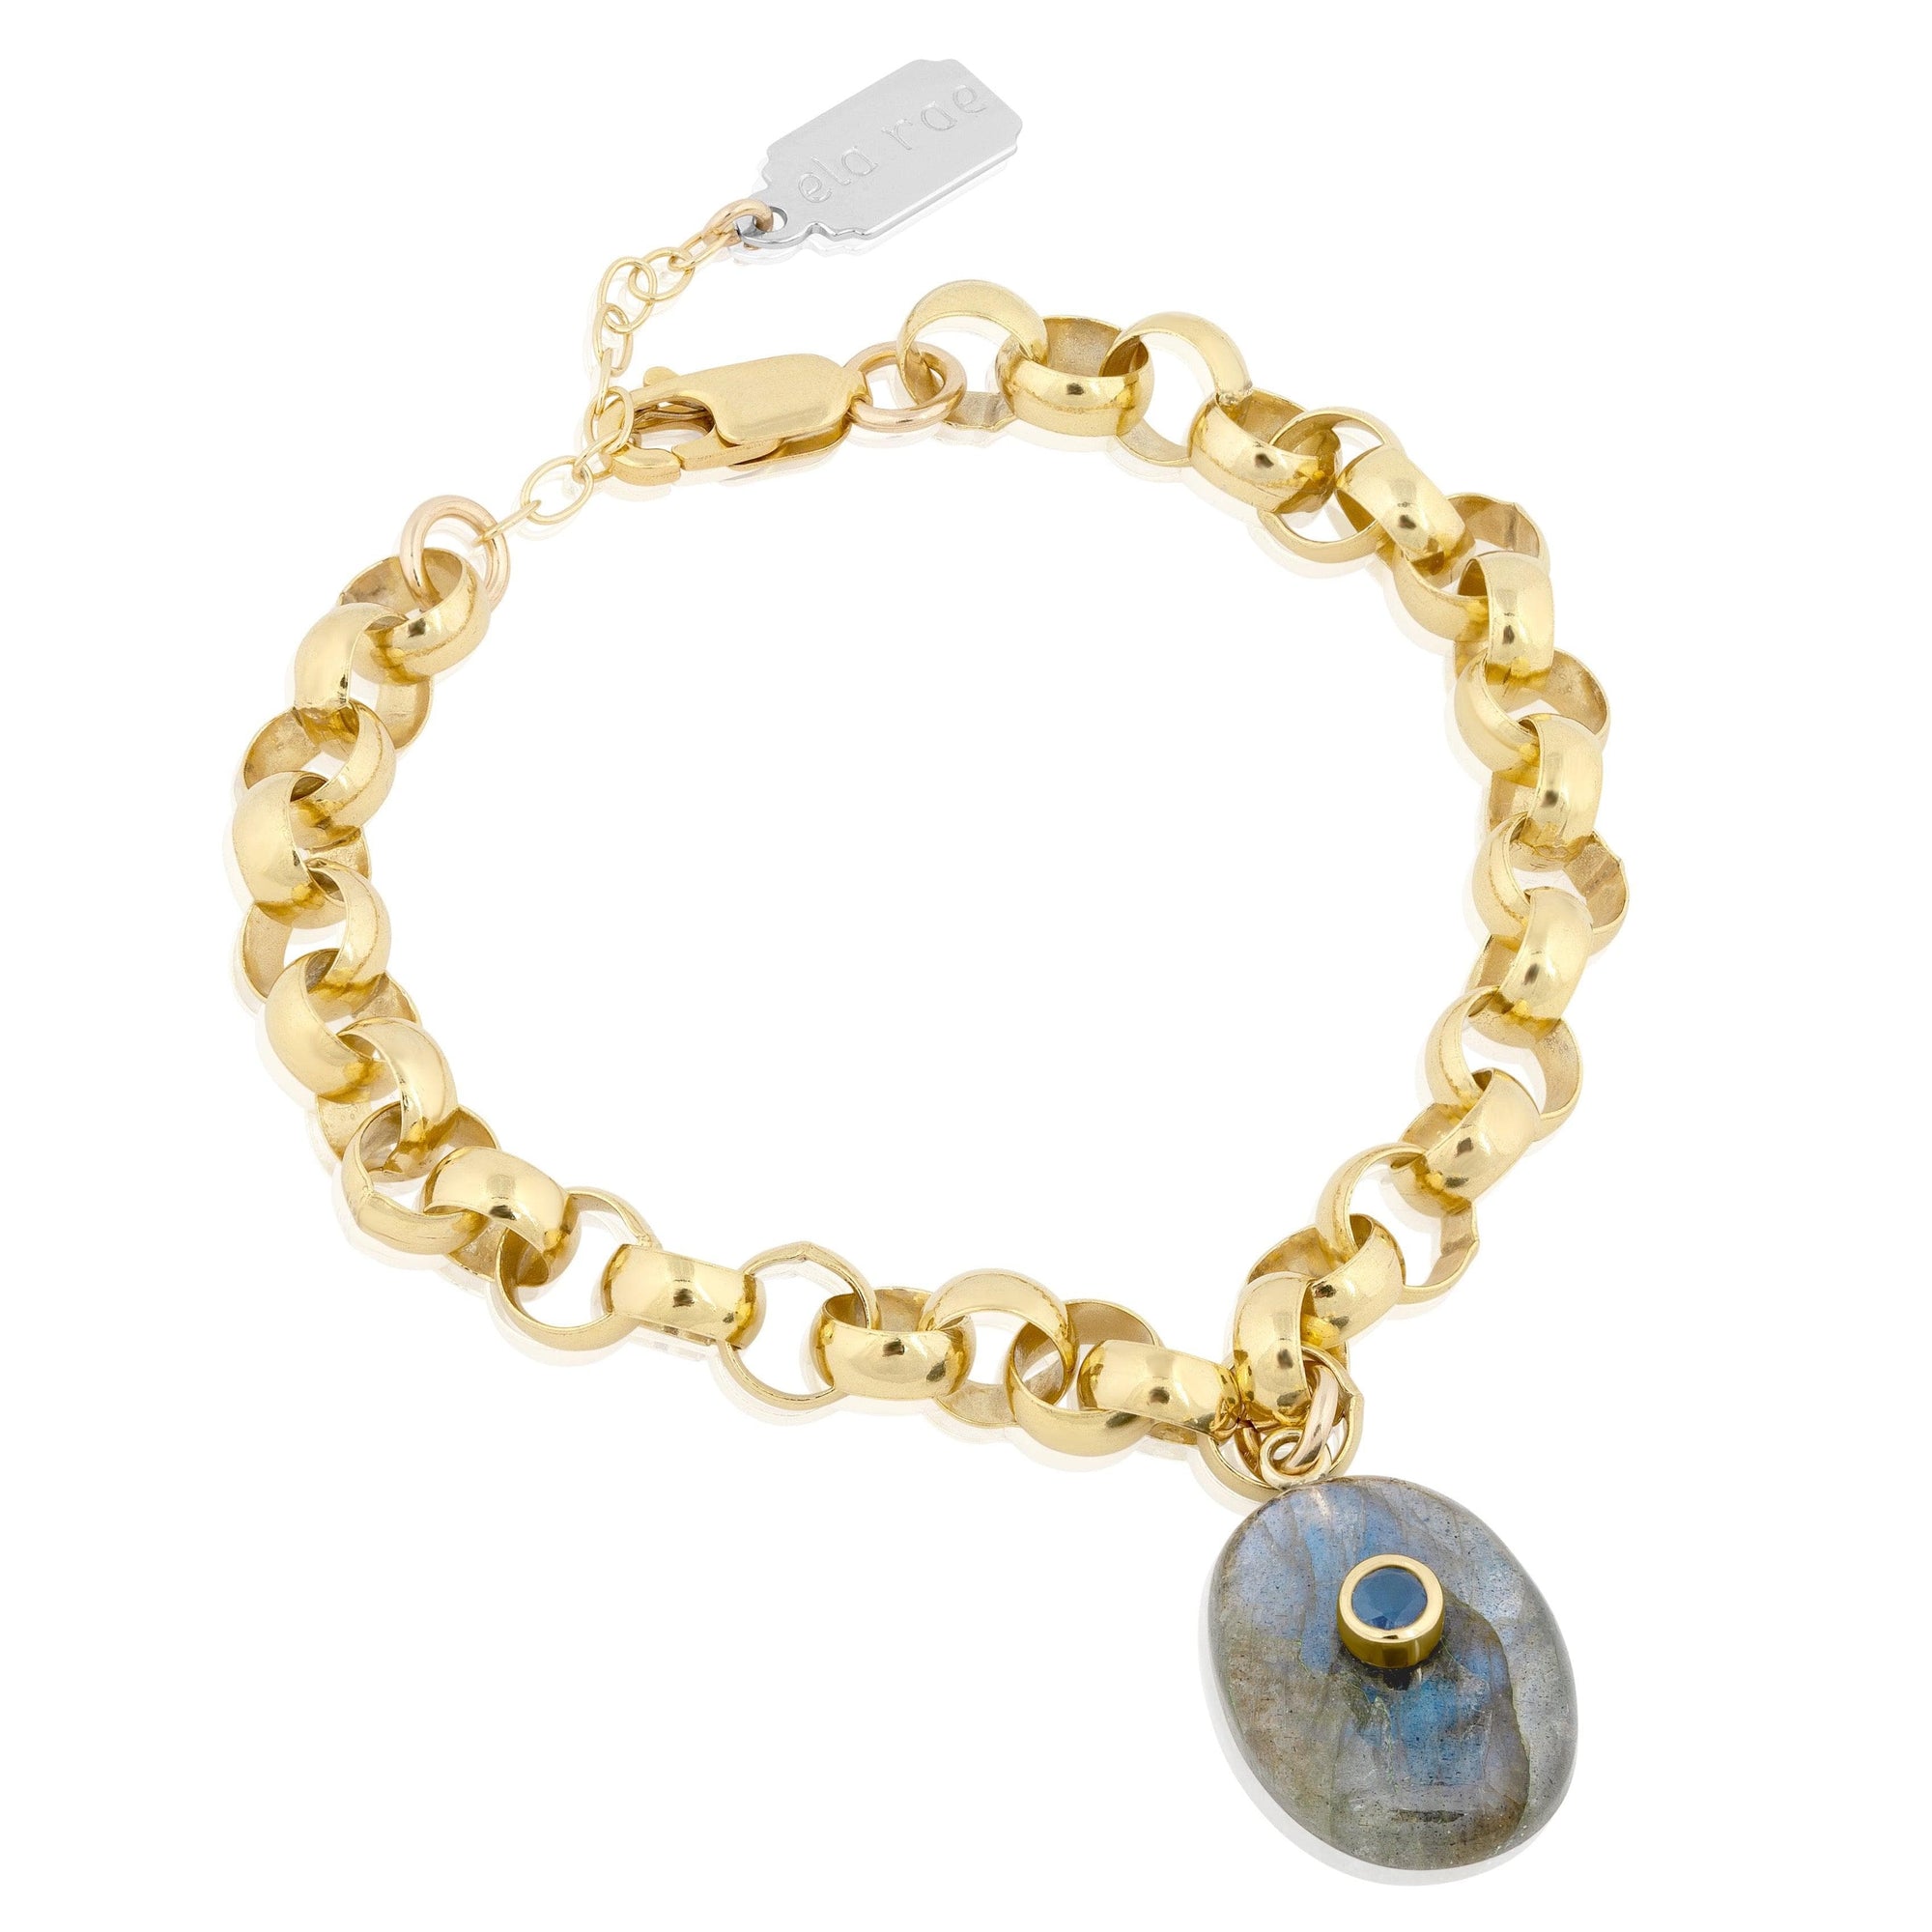 jumbo rolo bracelet | oval stone